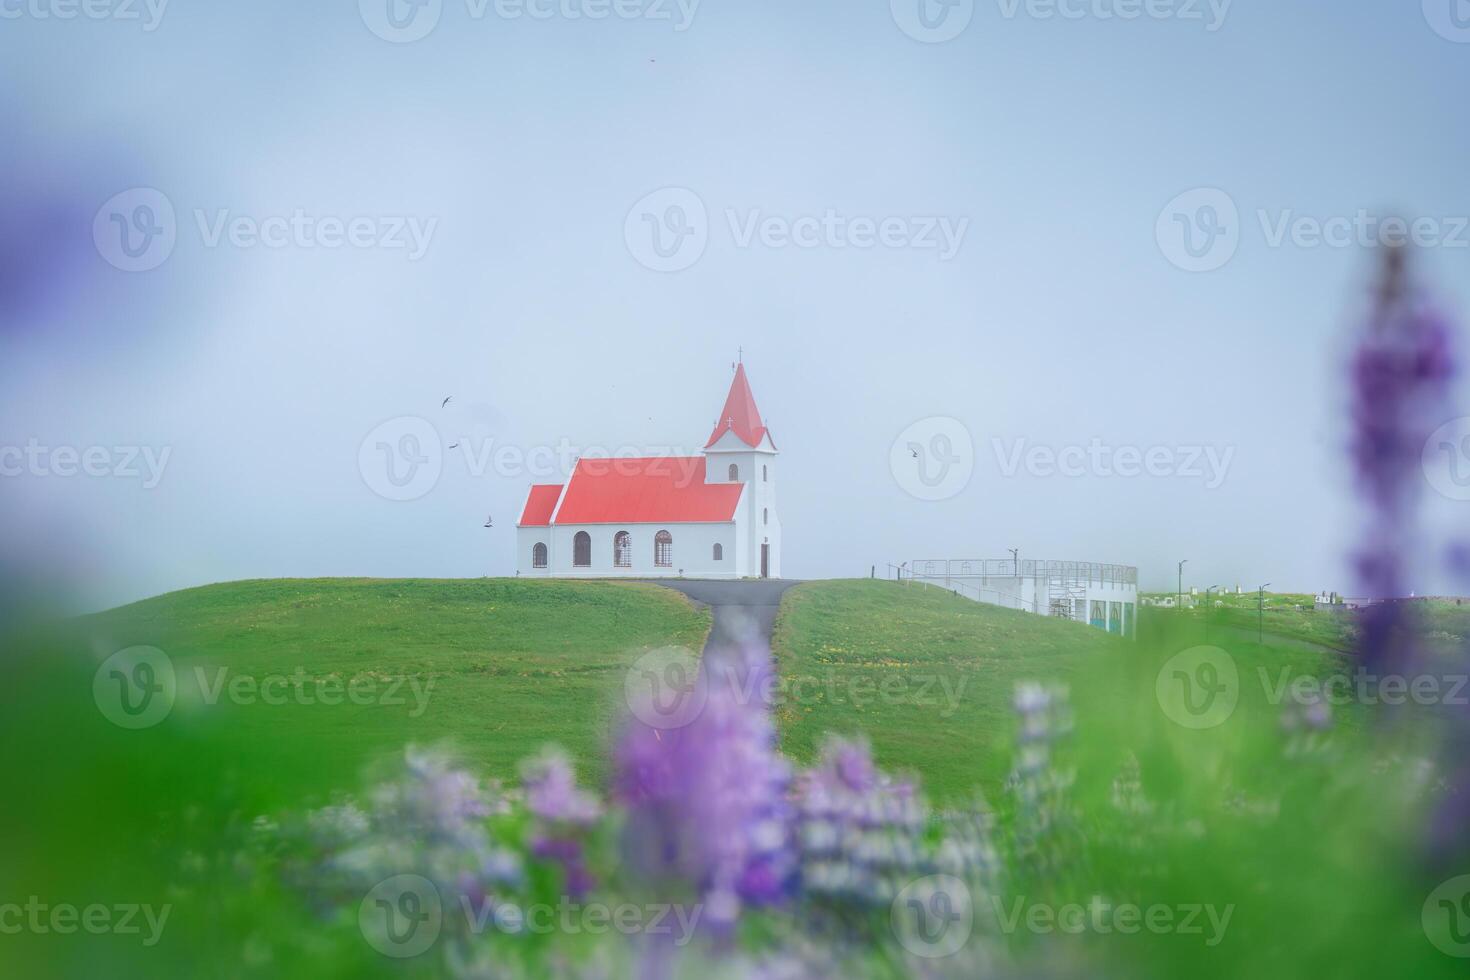 helig ingjaldsholskirkja kyrka på kulle med lupin blomma blomning i dimmig på sommar på island foto